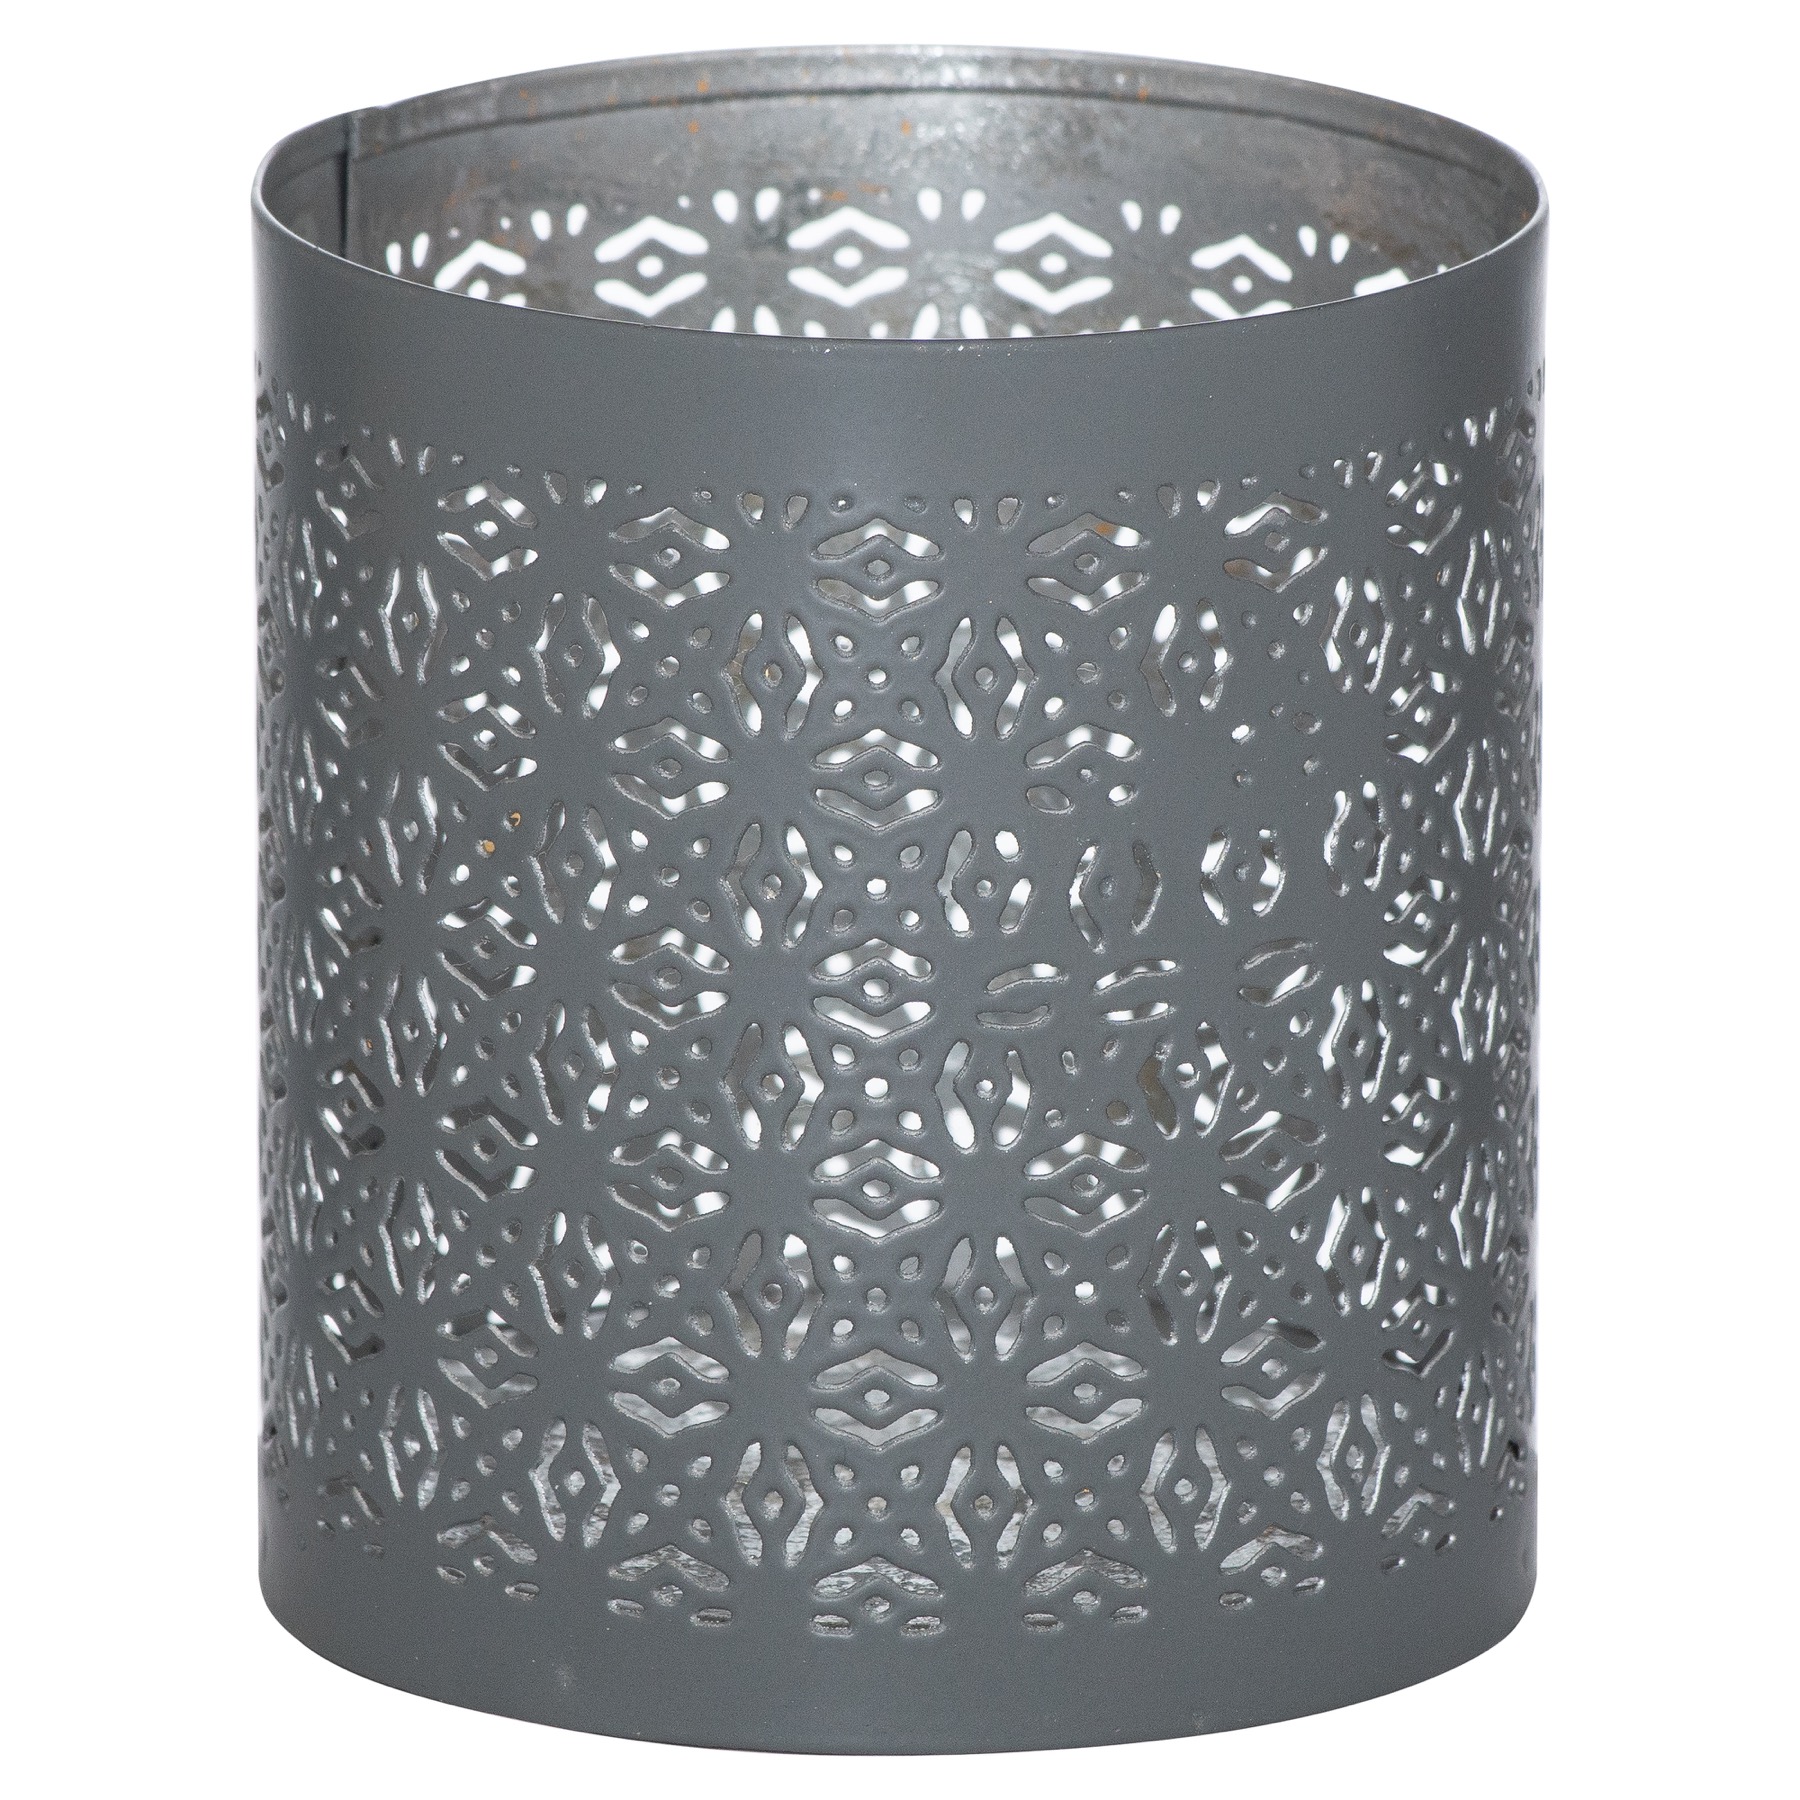 Small Silver And Grey Glowray Lantern - Image 1